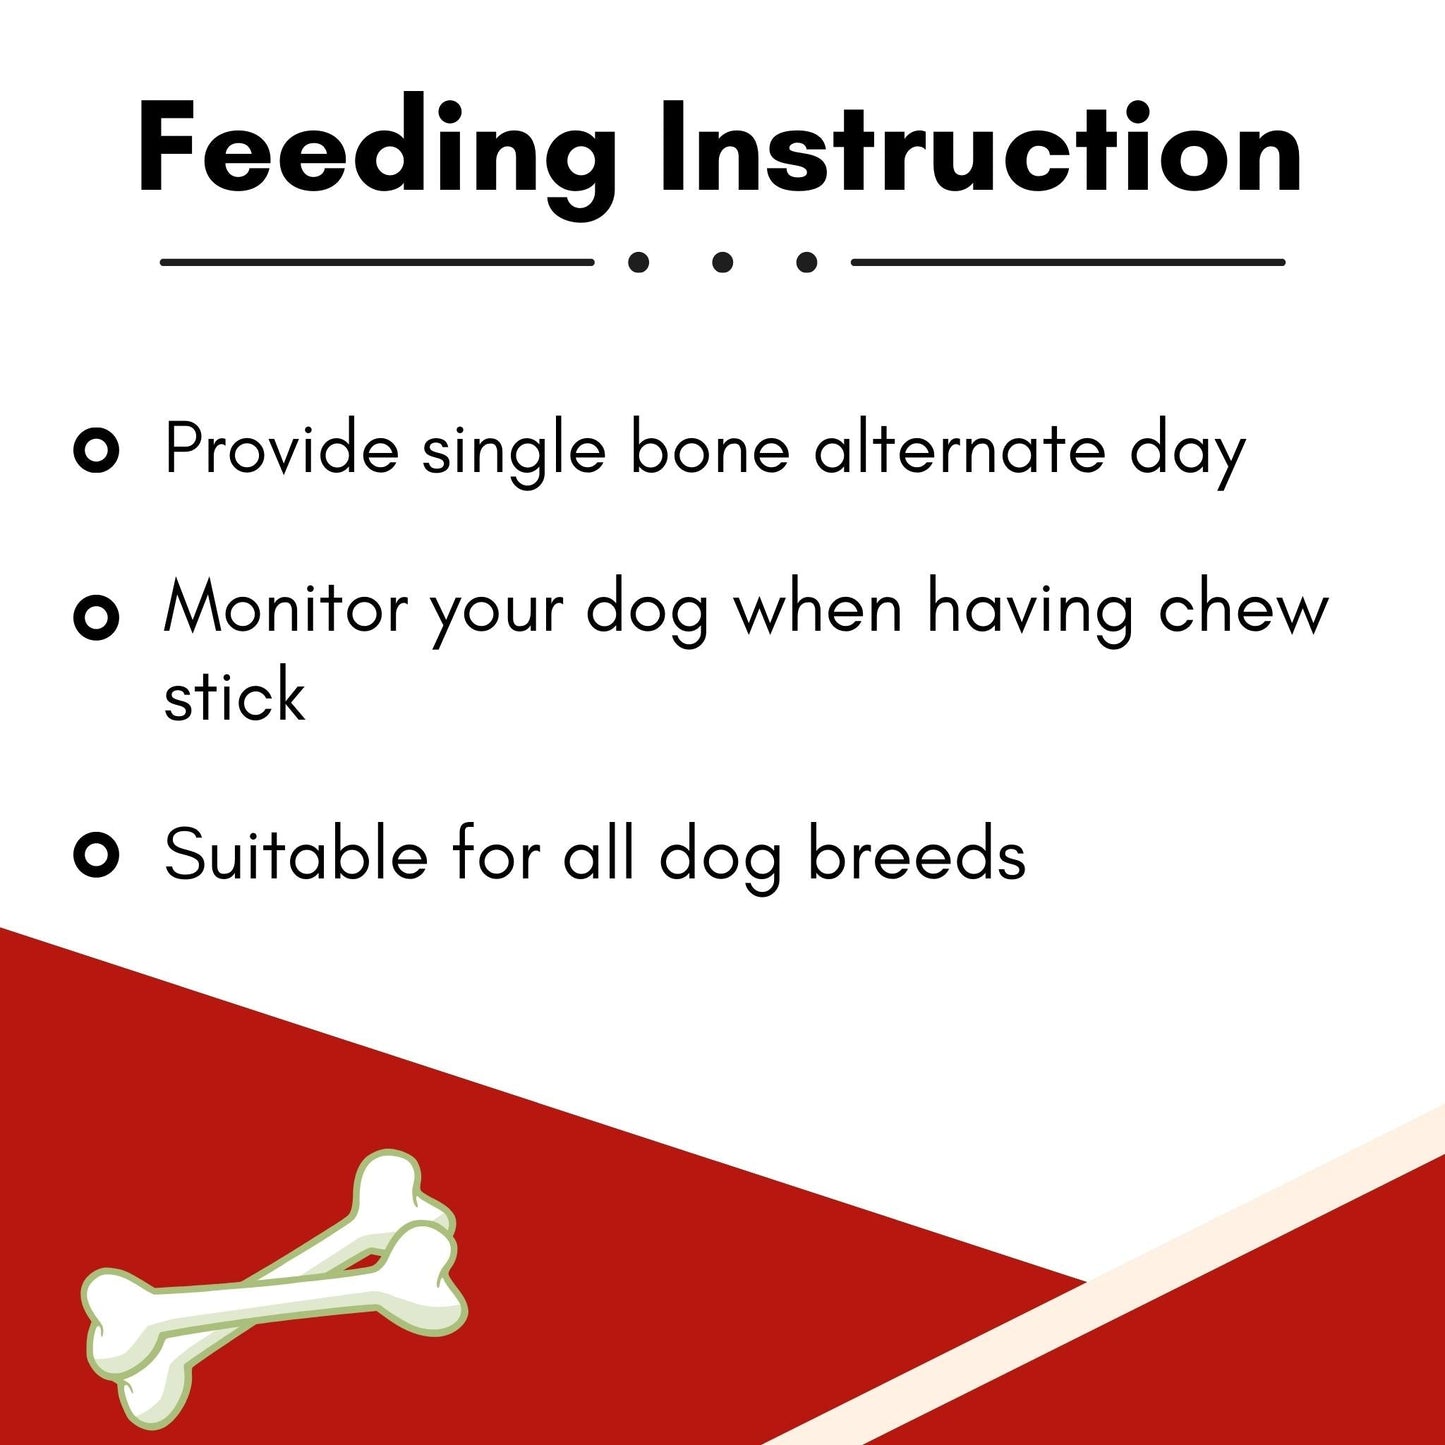 Foodie Puppies Chompsters Rawhide Bone for Dogs - 8inch Bone, 20Kg